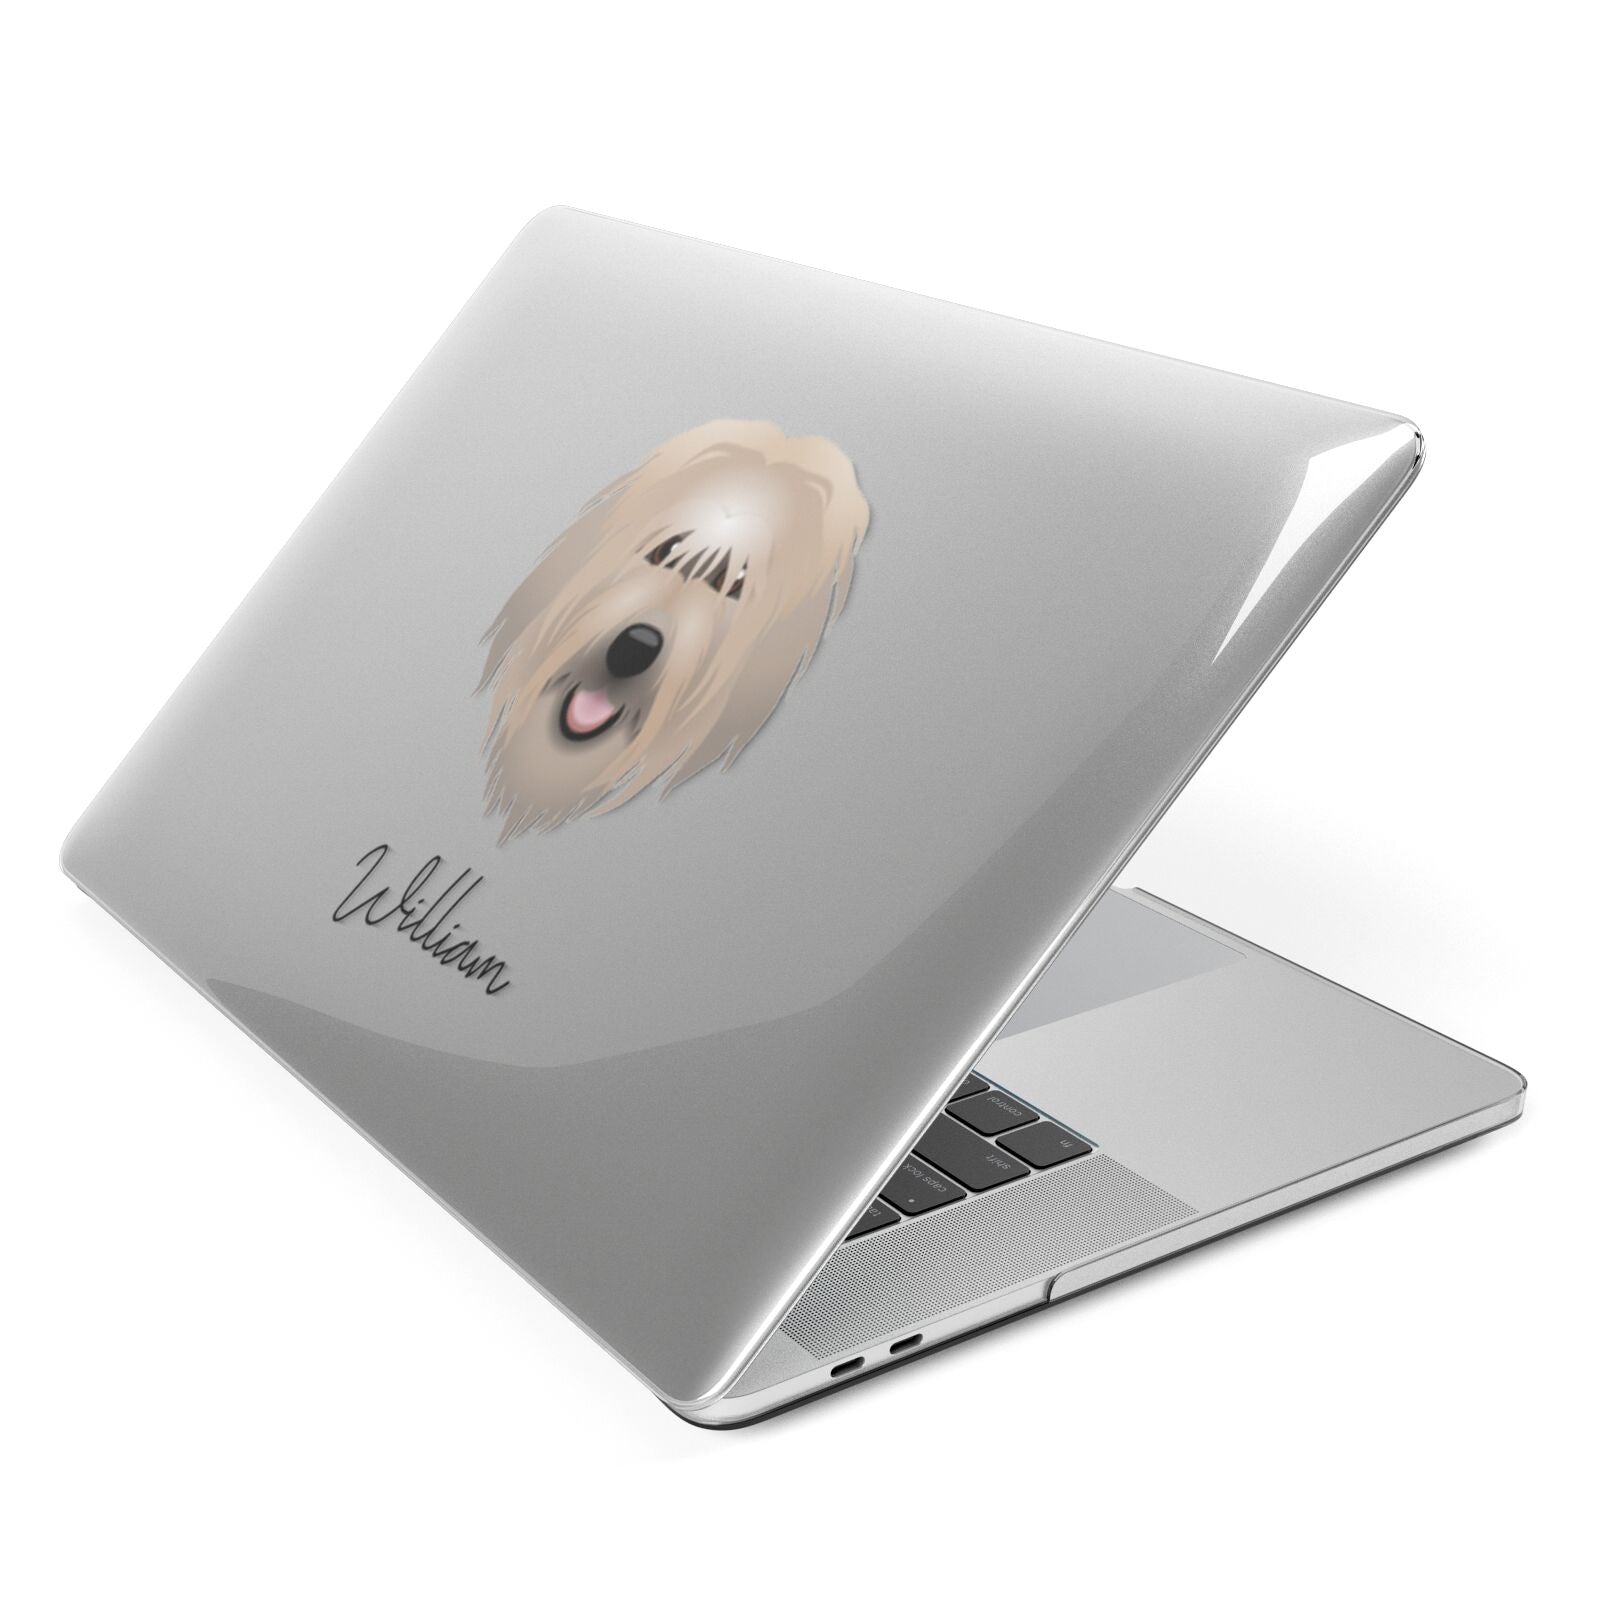 Catalan Sheepdog Personalised Apple MacBook Case Side View